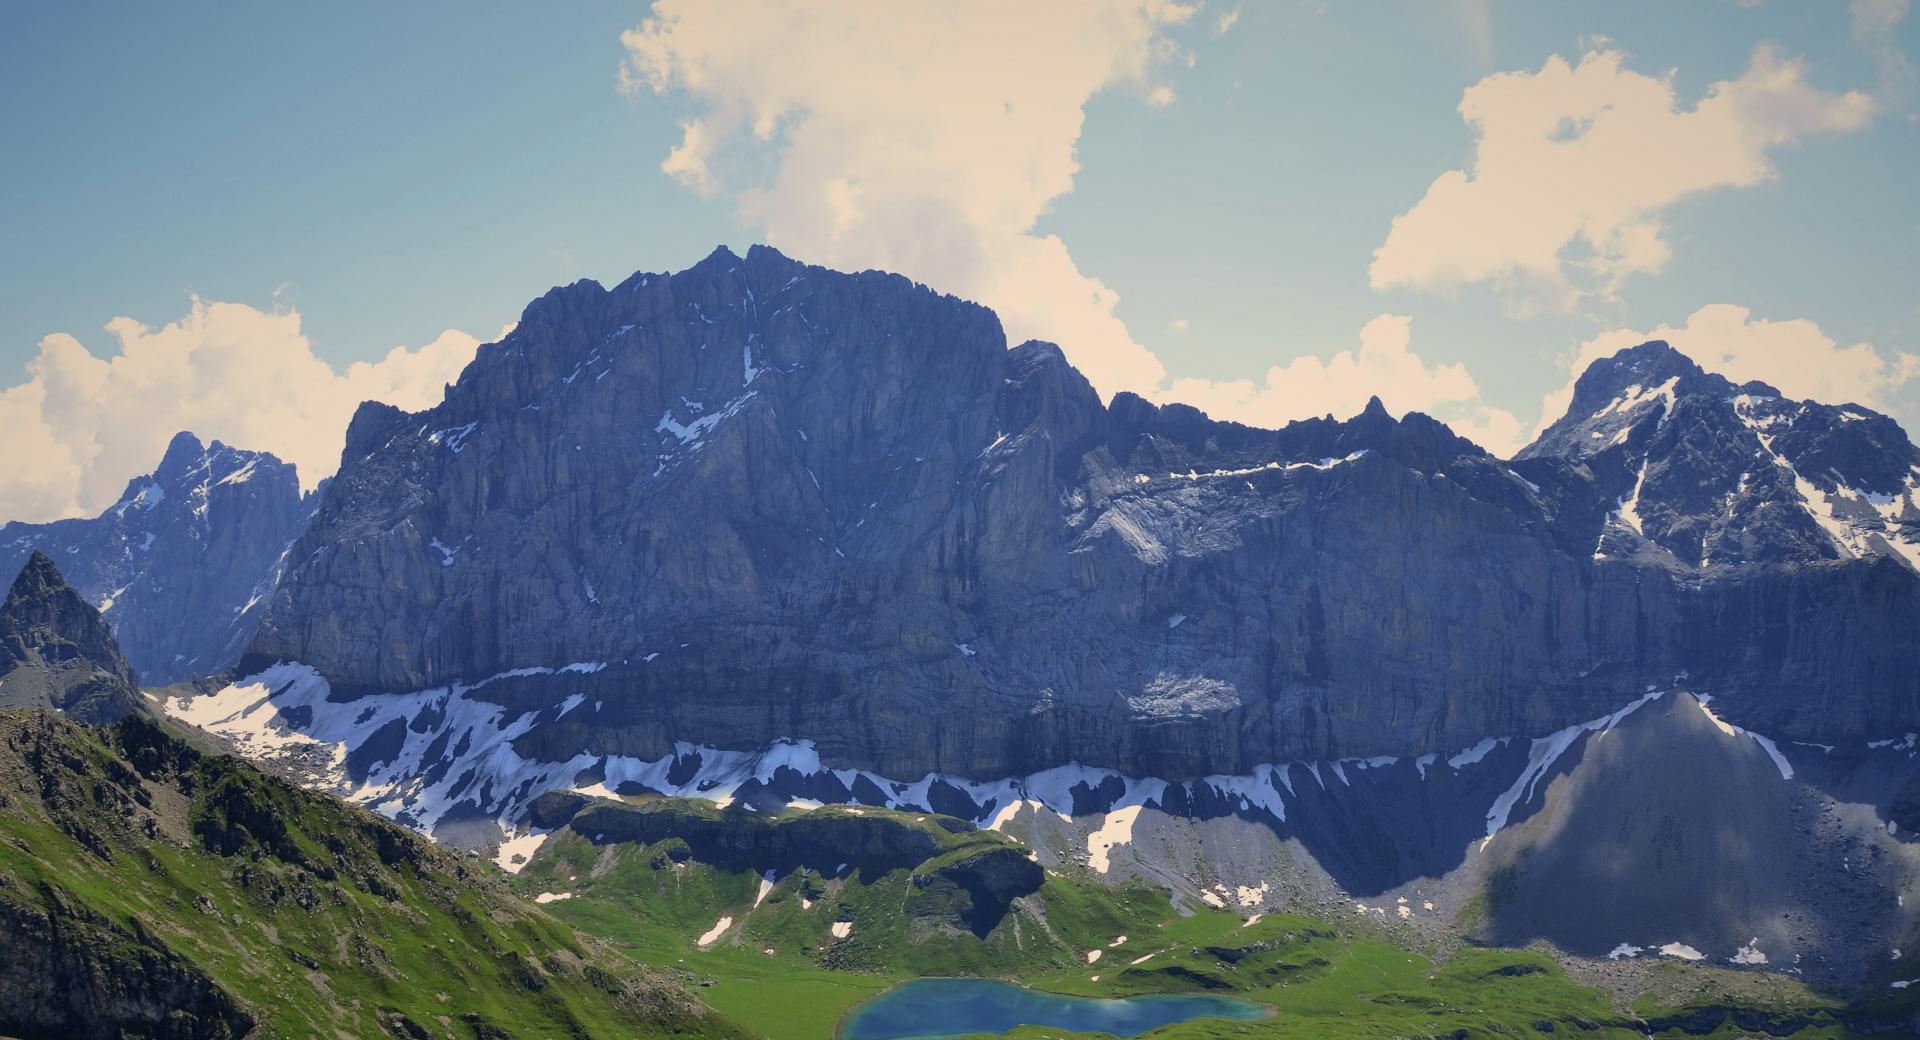 Beautiful Mountain Lake at 1280 x 960 size wallpapers HD quality